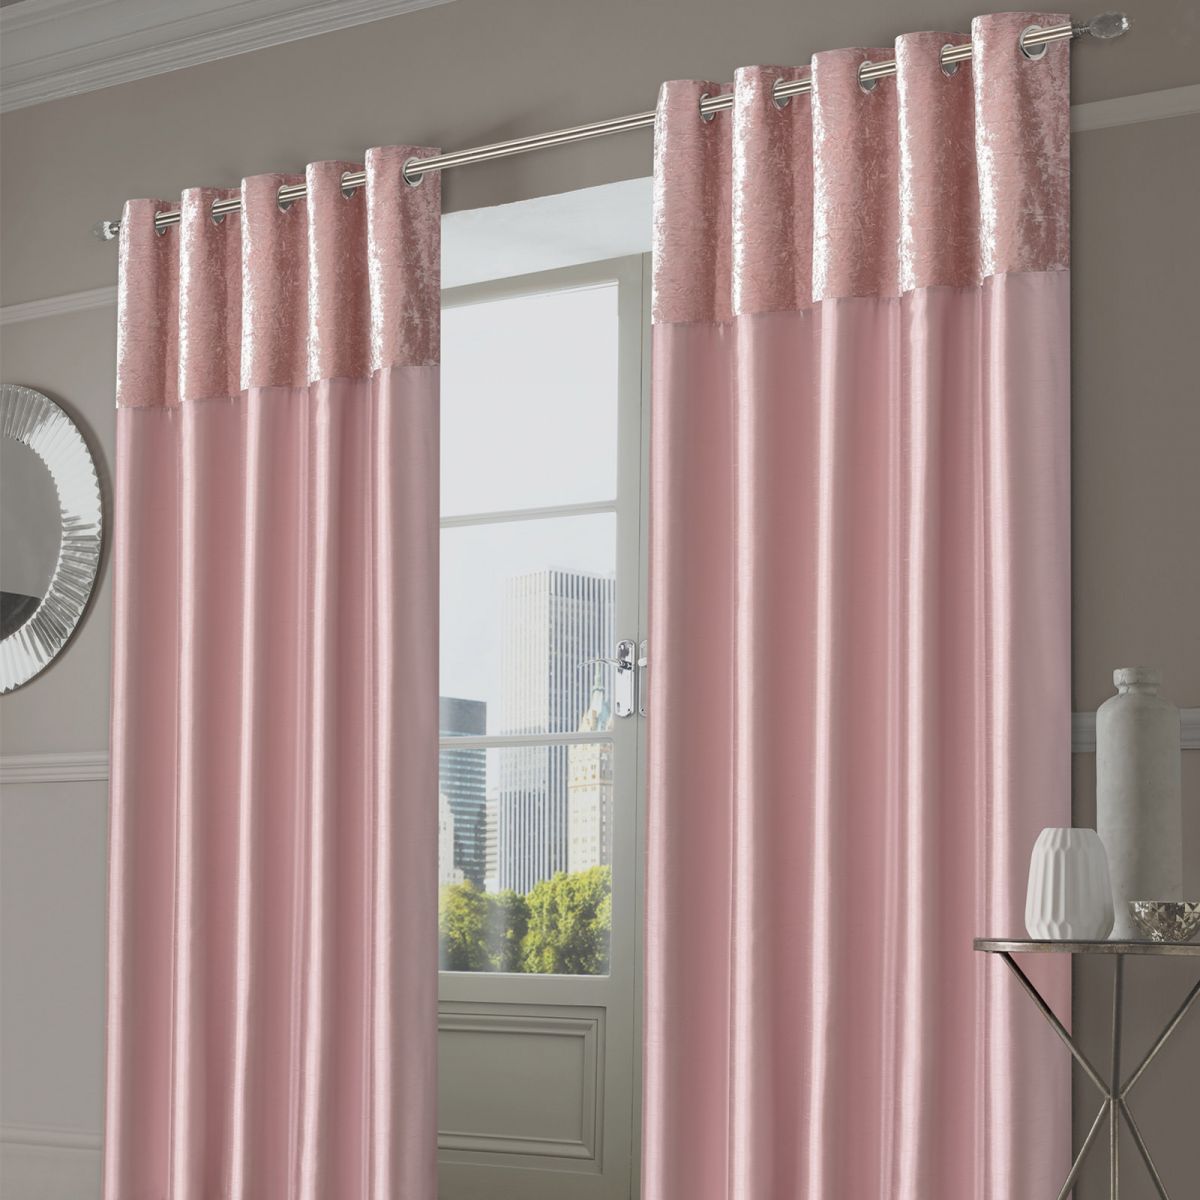 Sienna Home Manhattan Crushed Velvet Band Eyelet Curtains - Blush Pink, 90" x 54"